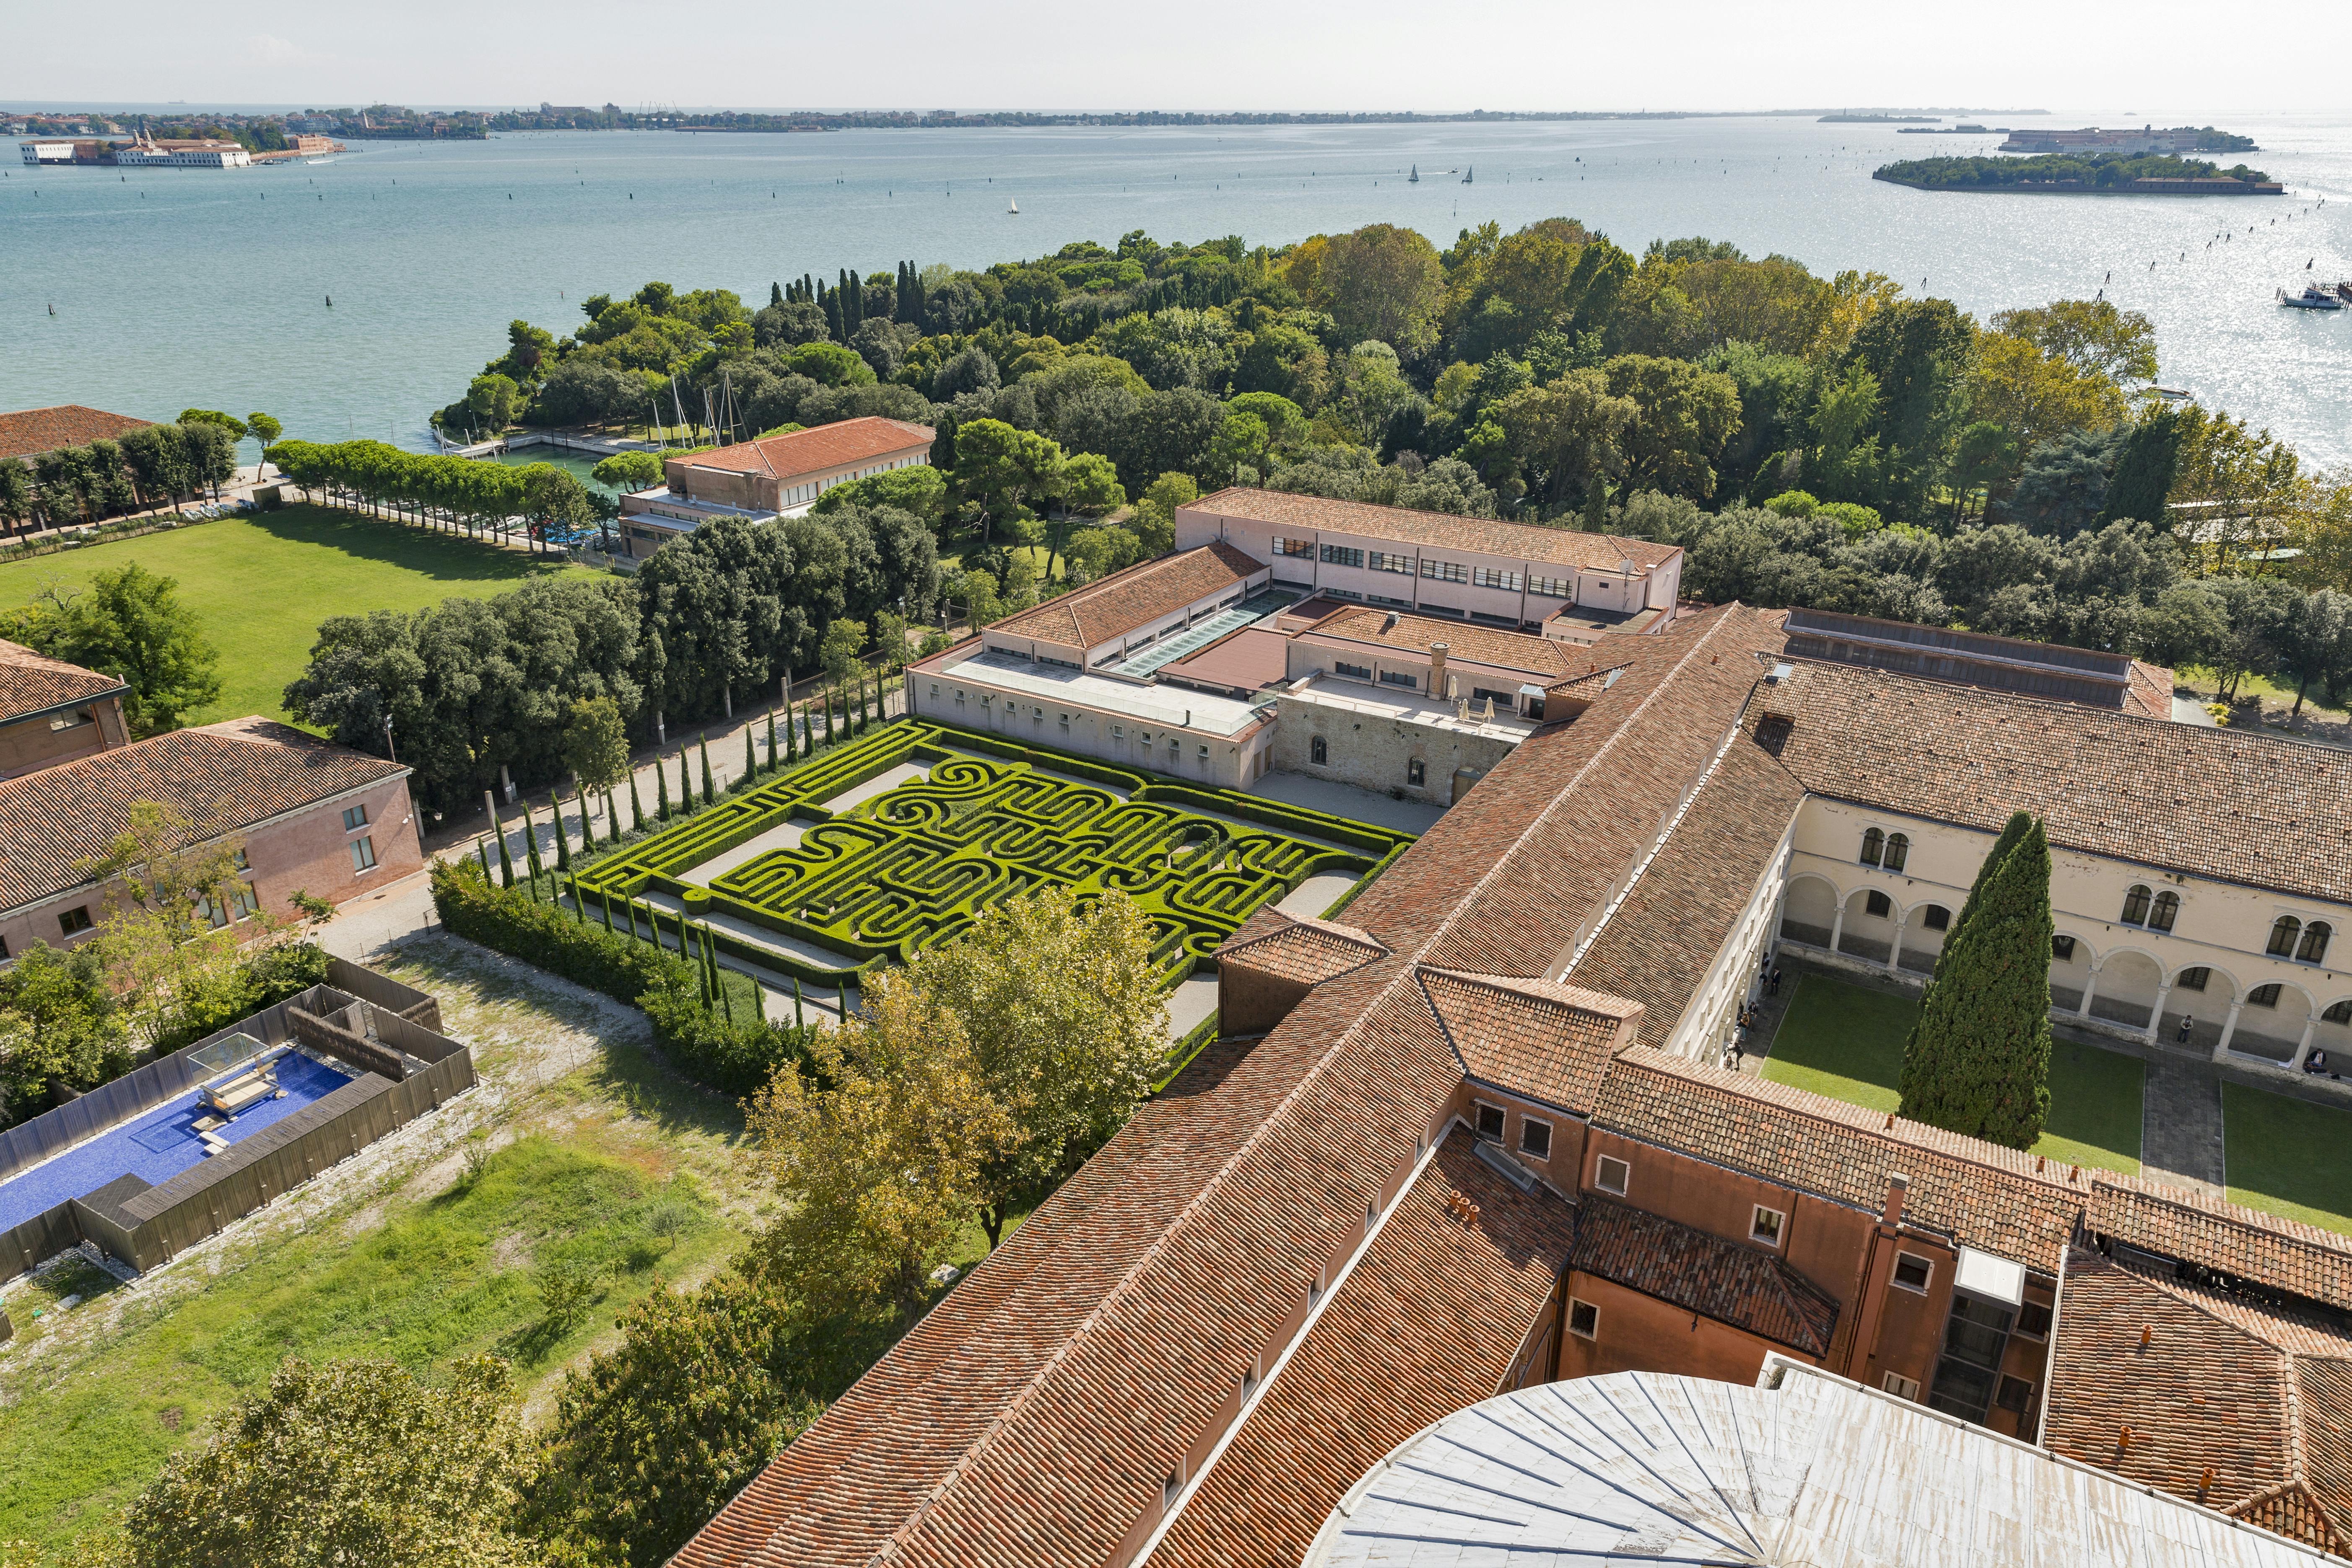 Fondazione Giorgio Cini Borges Labyrinth and Vatican chapels tour with audioguide Musement